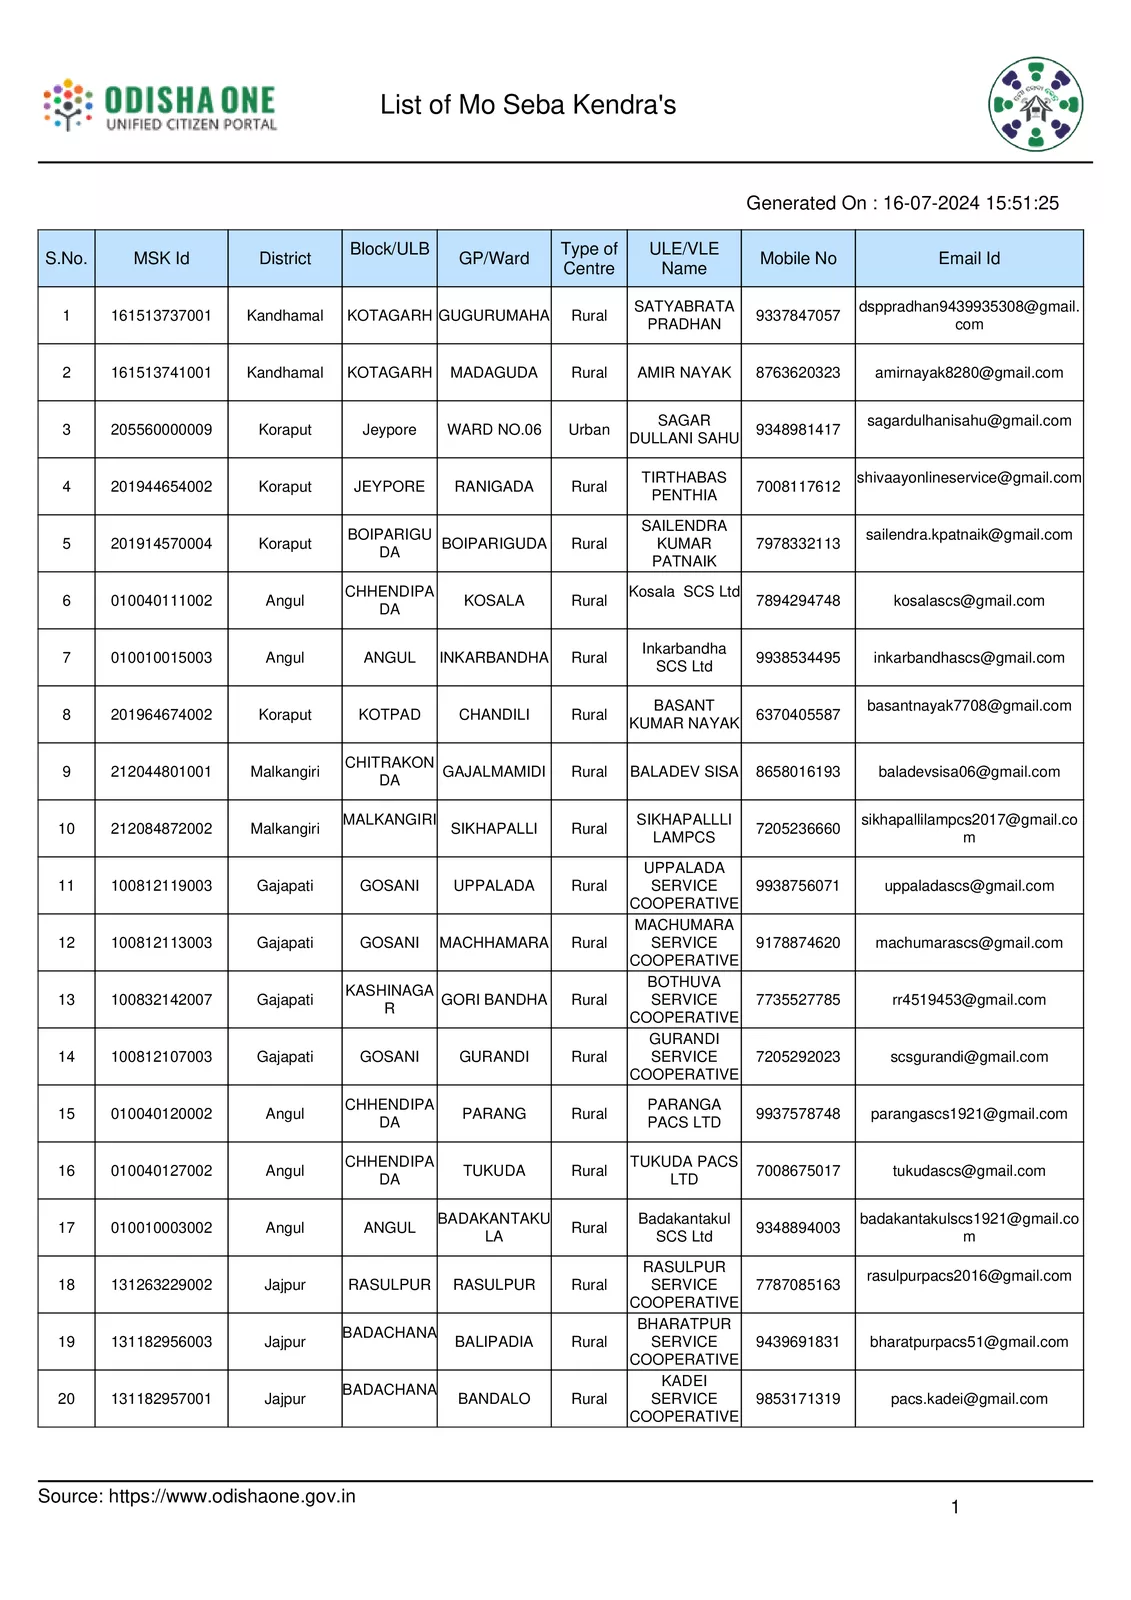 Odisha Mo Seba Kendra List (odishaone.gov.in) PDF